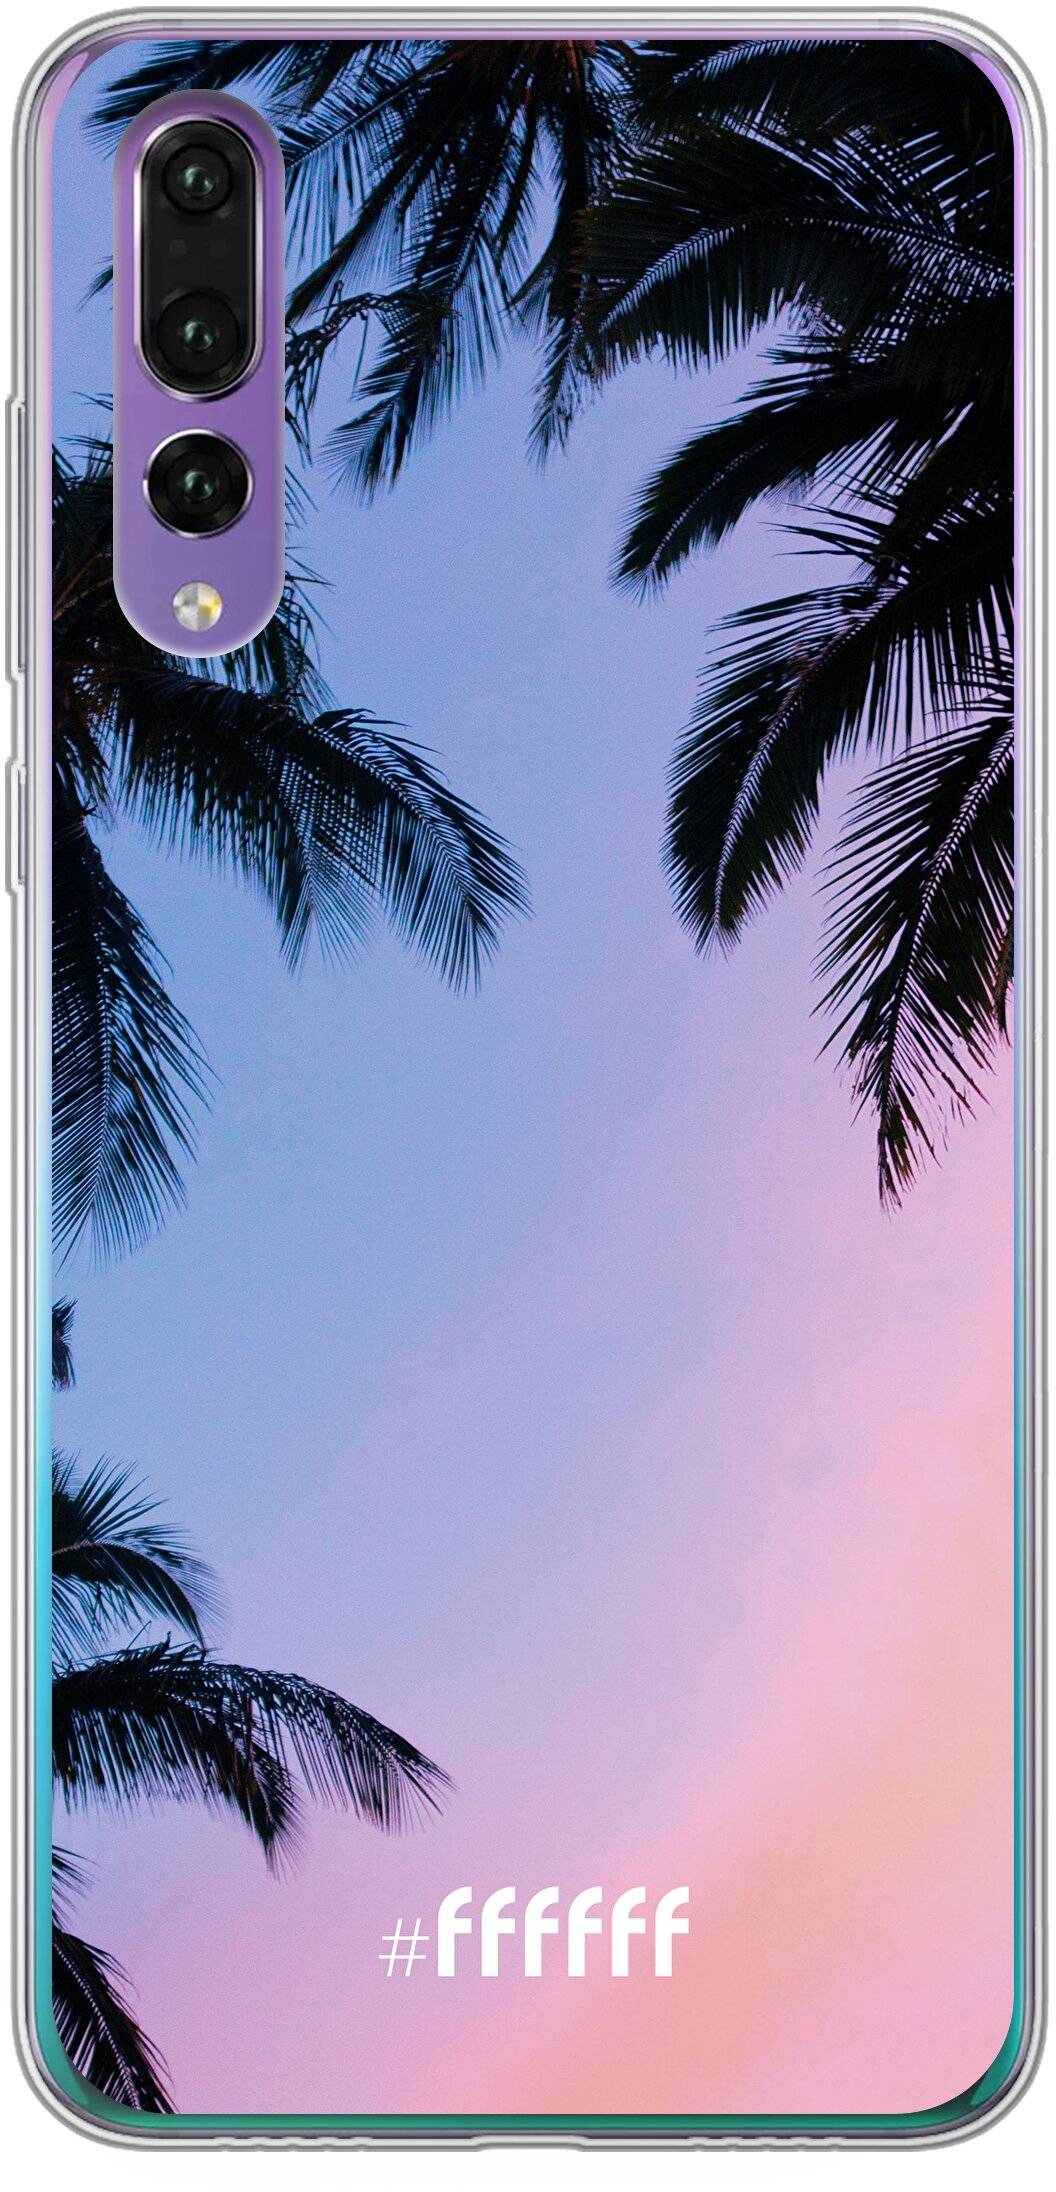 Sunset Palms P30